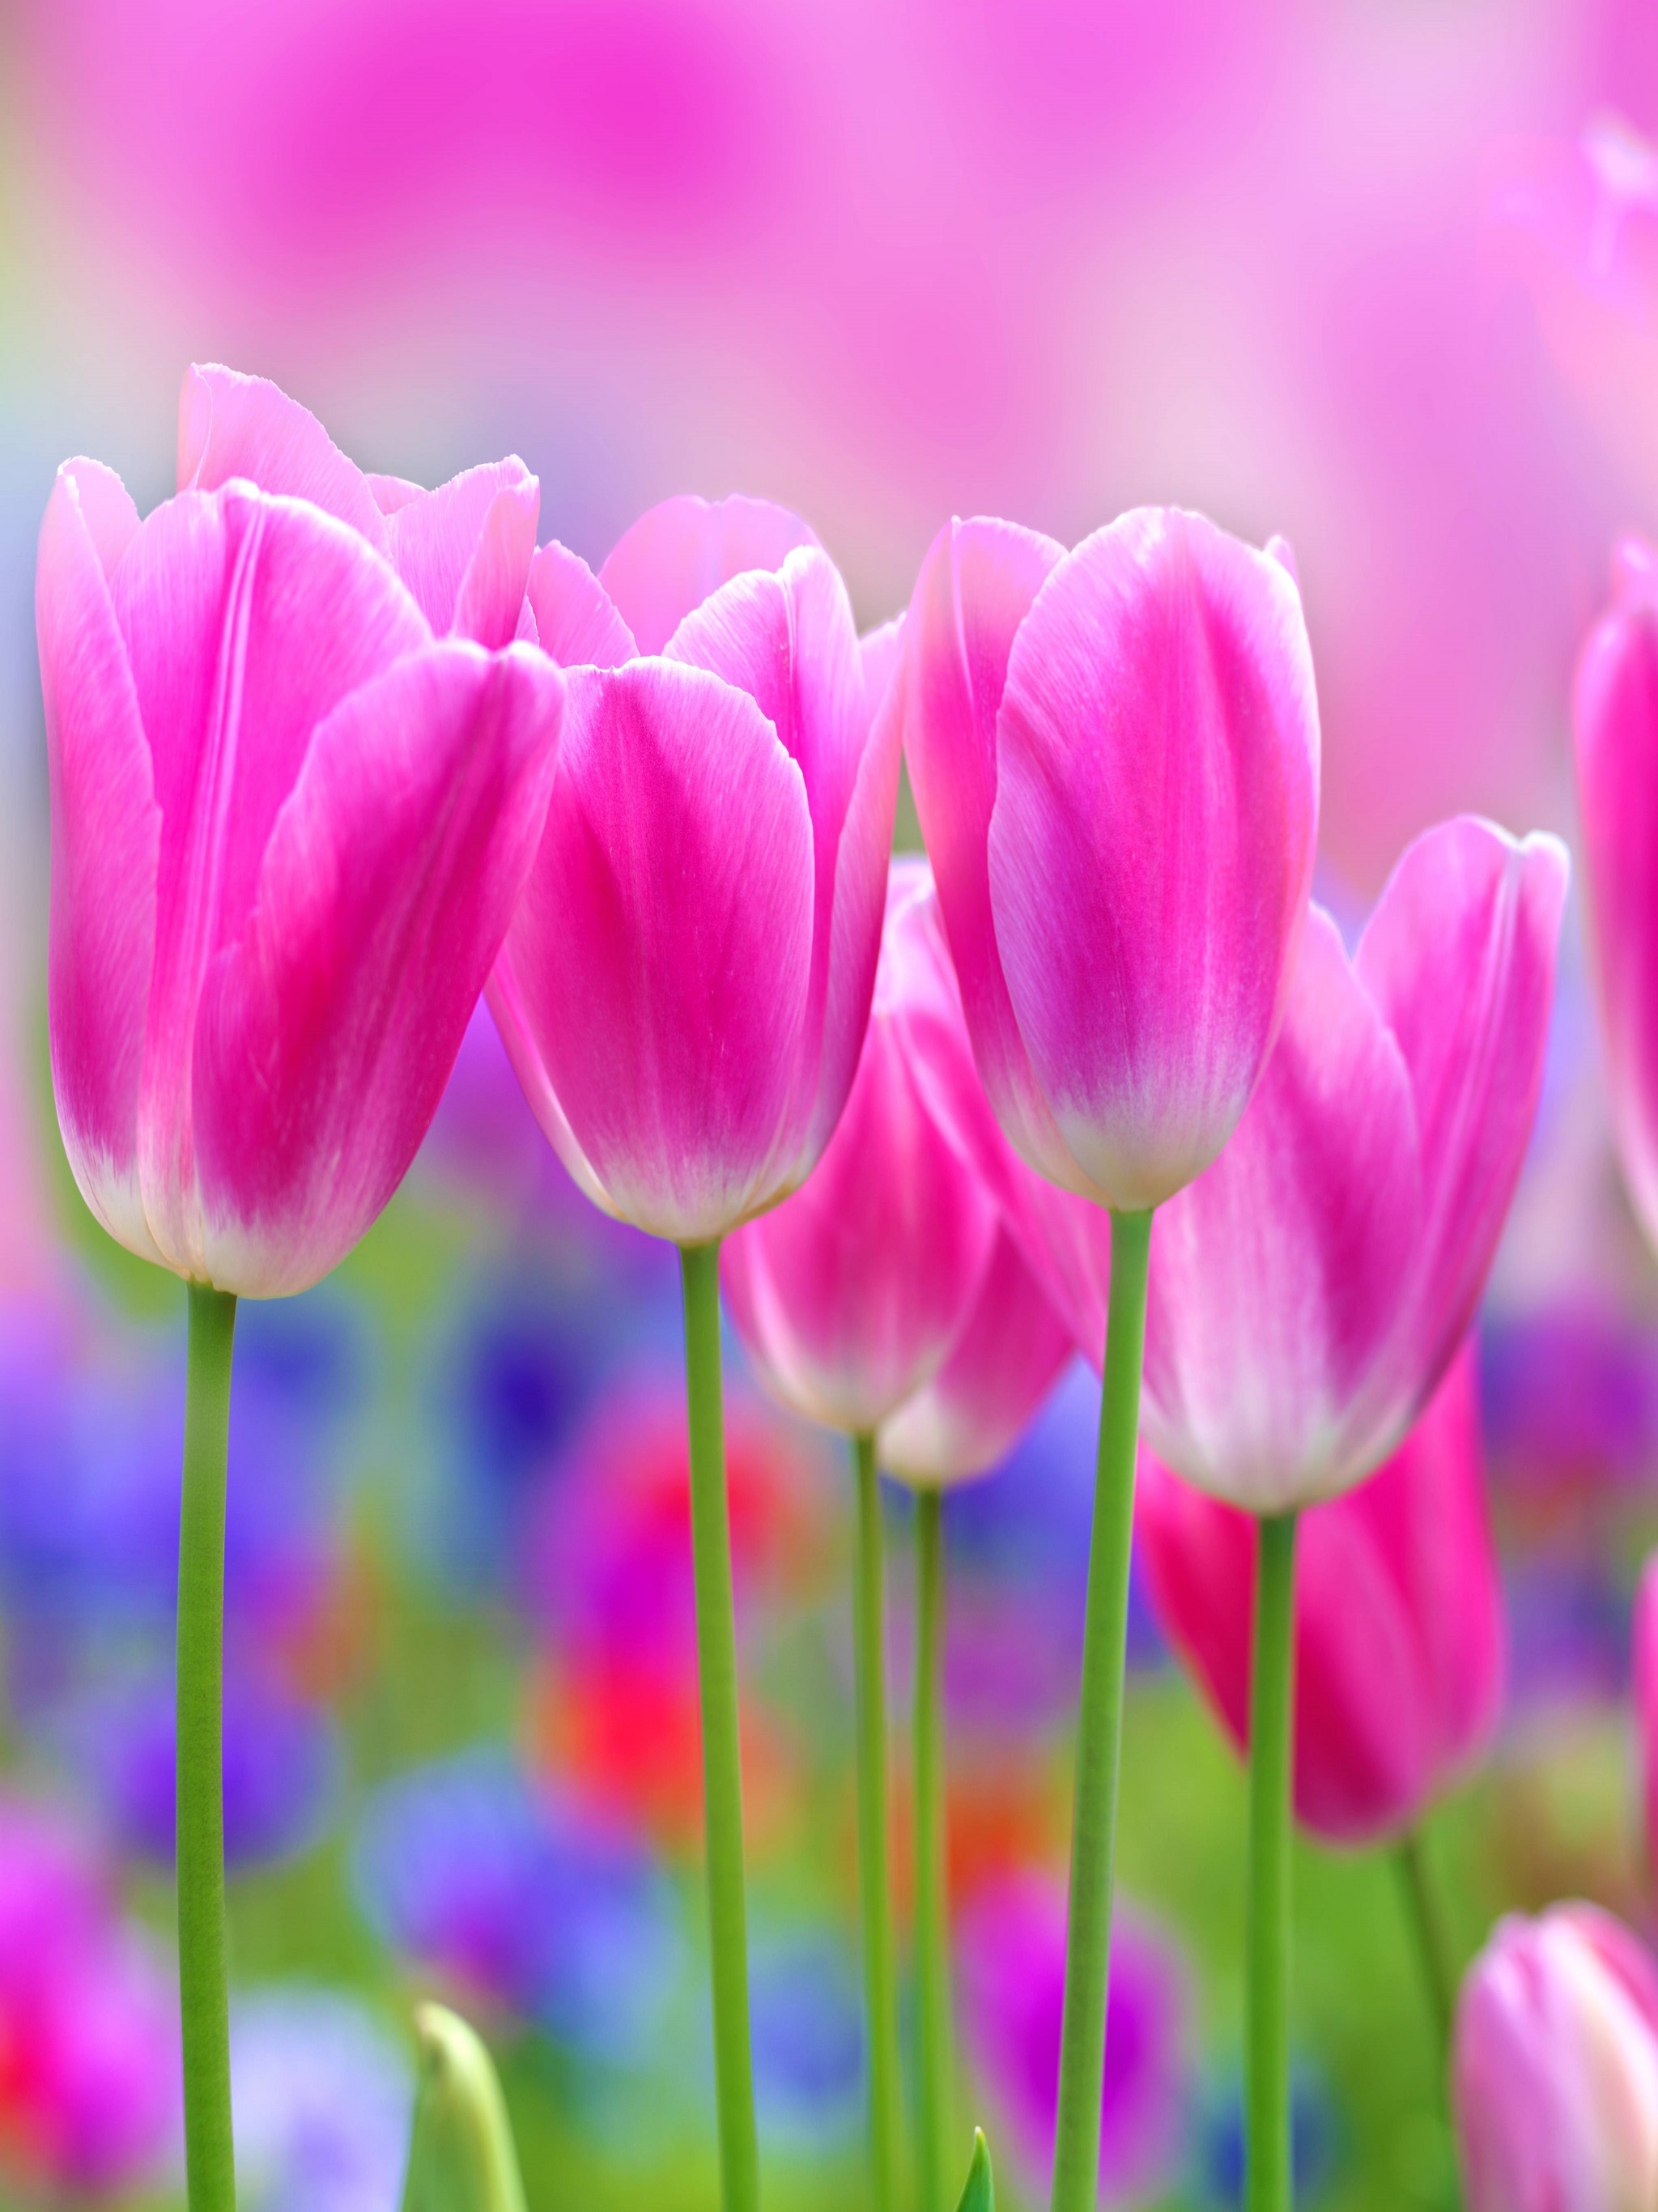 Pink Tulips for Apple iPad Pro resolution